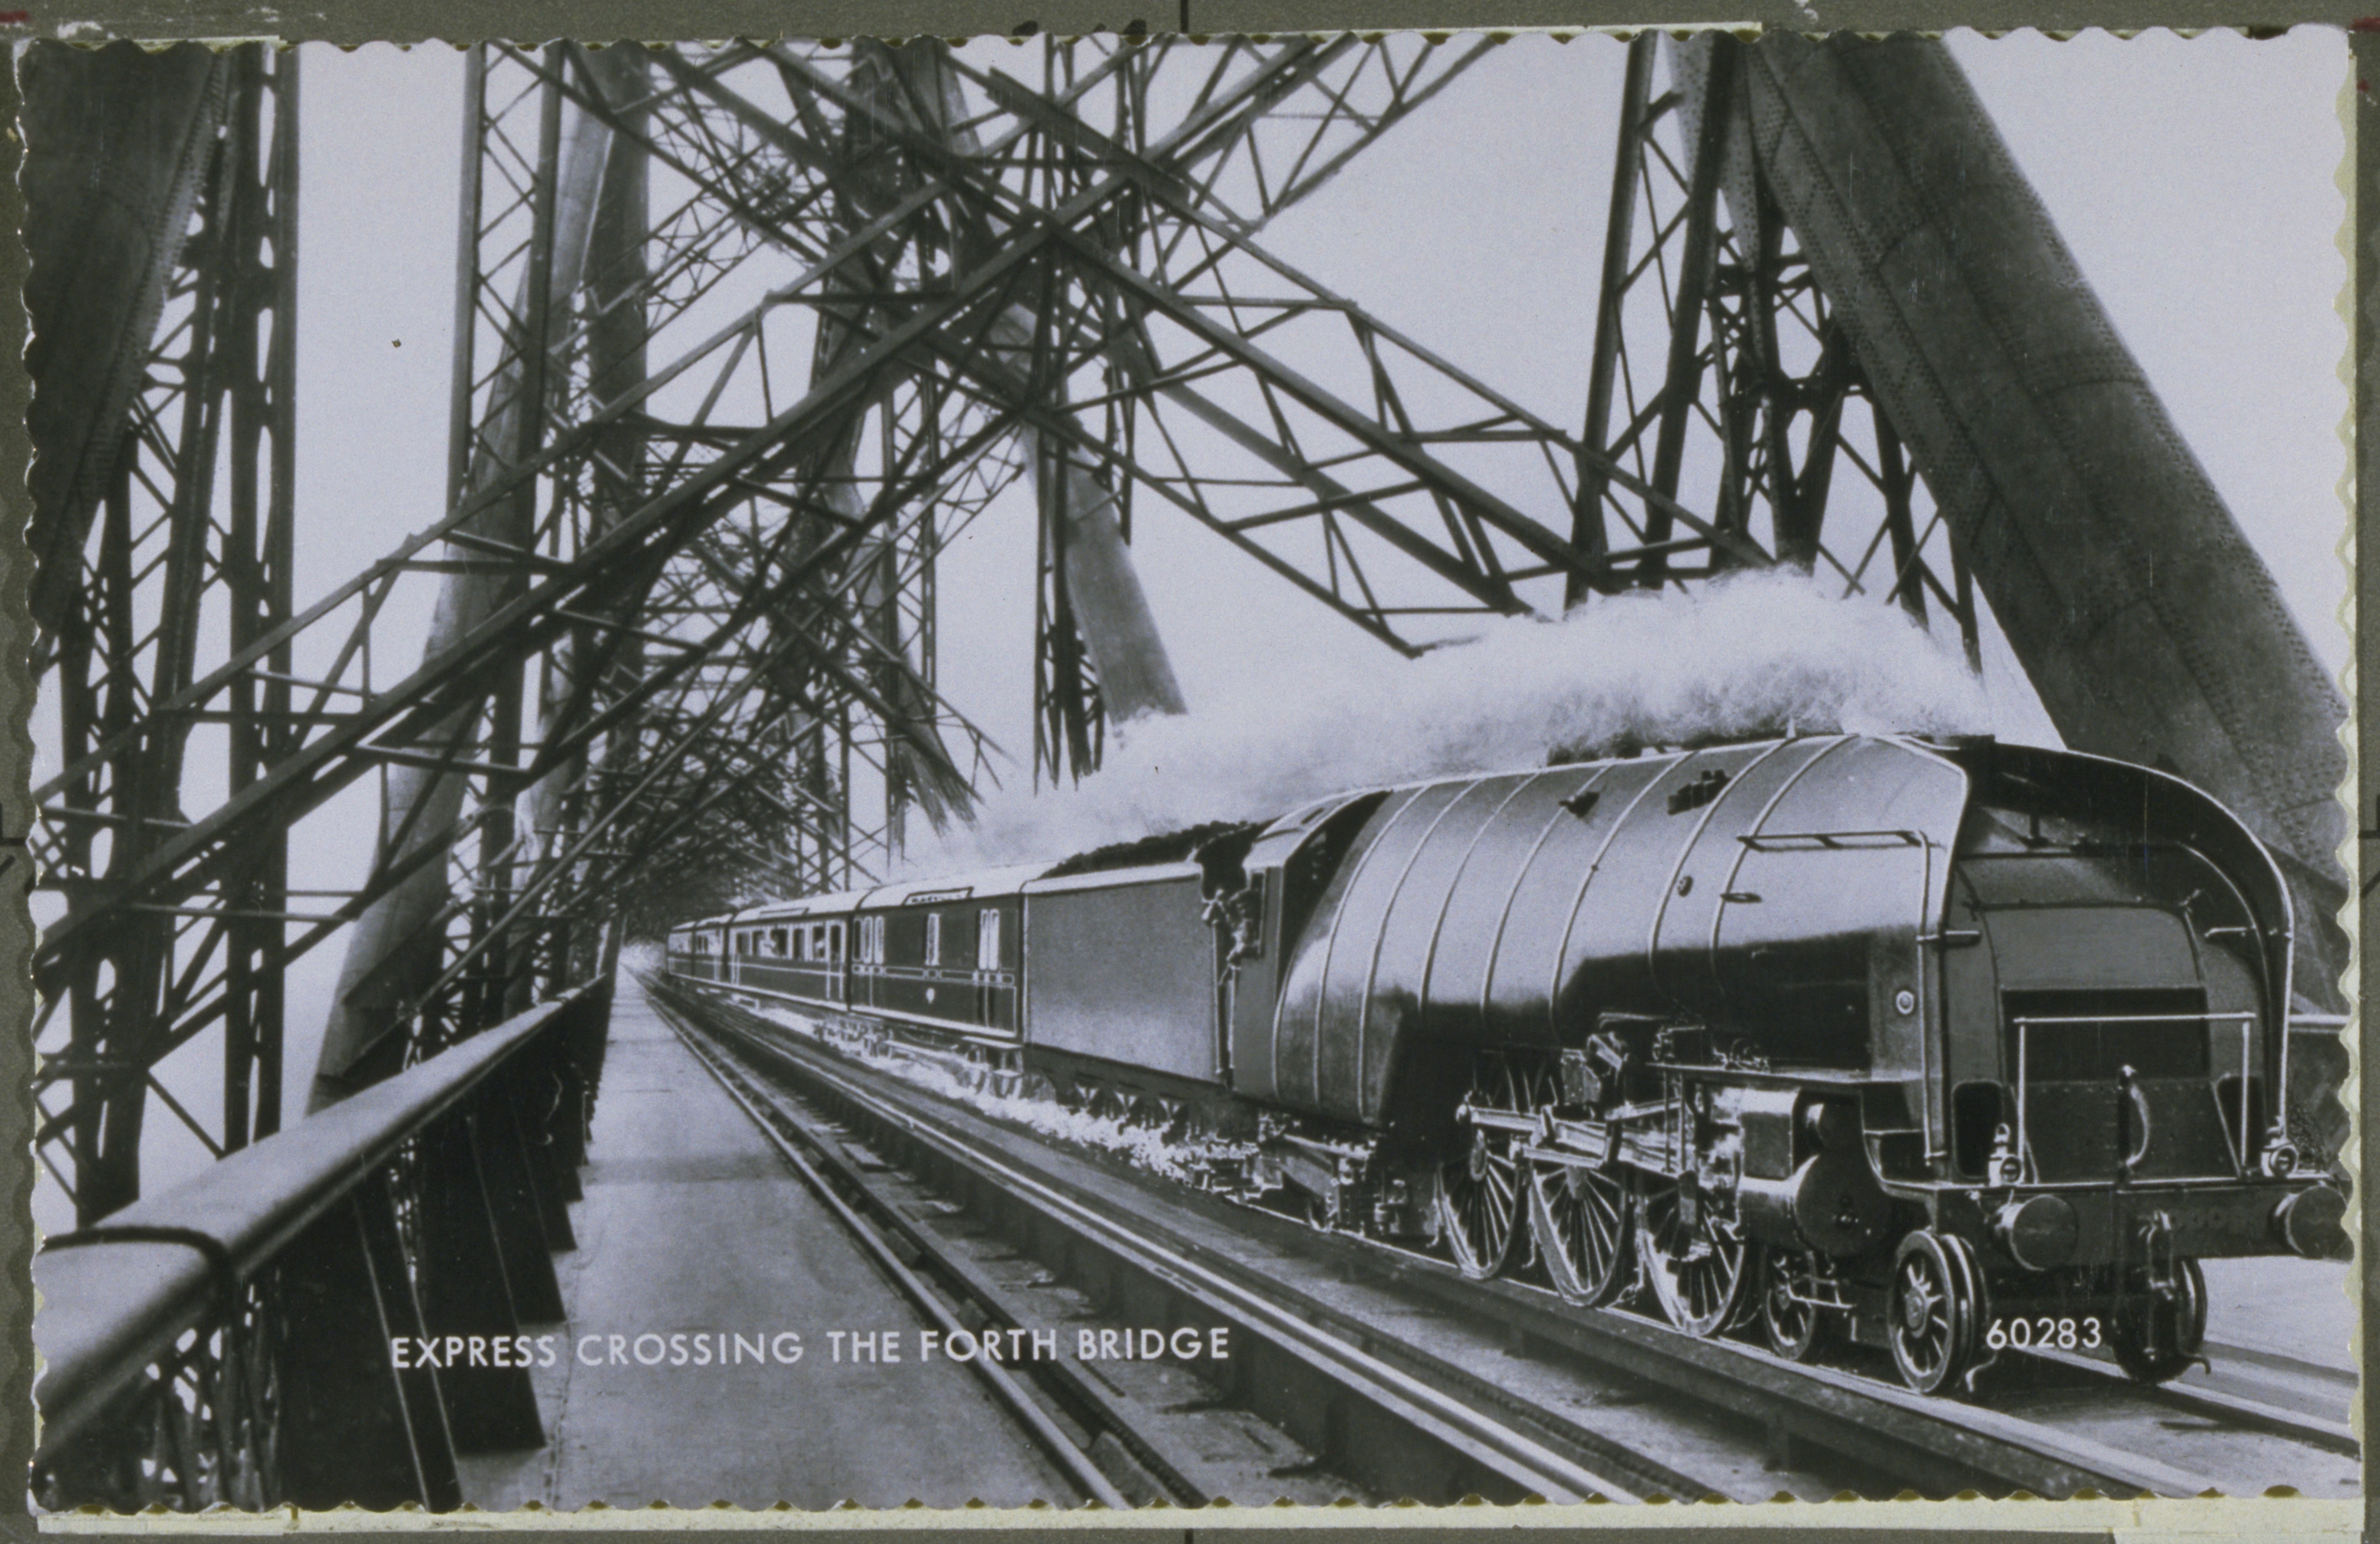 “Express crossing Forth Bridge” by J. Valentine & Co., 1908 (St Andrews JV-60283)